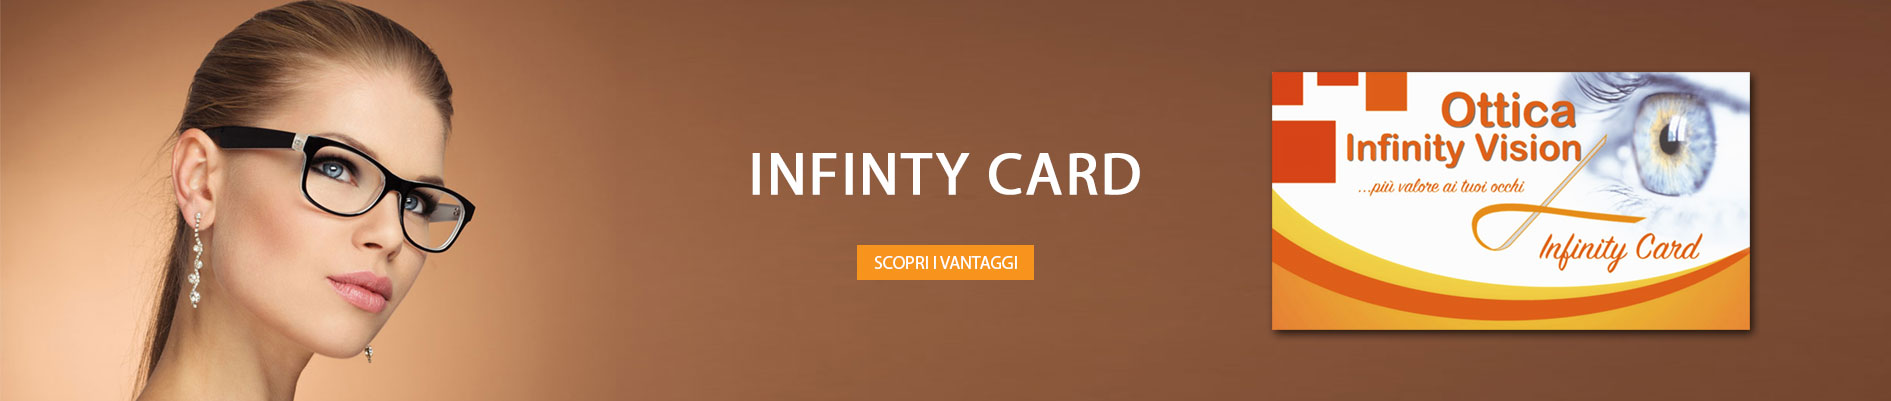 infinity-card